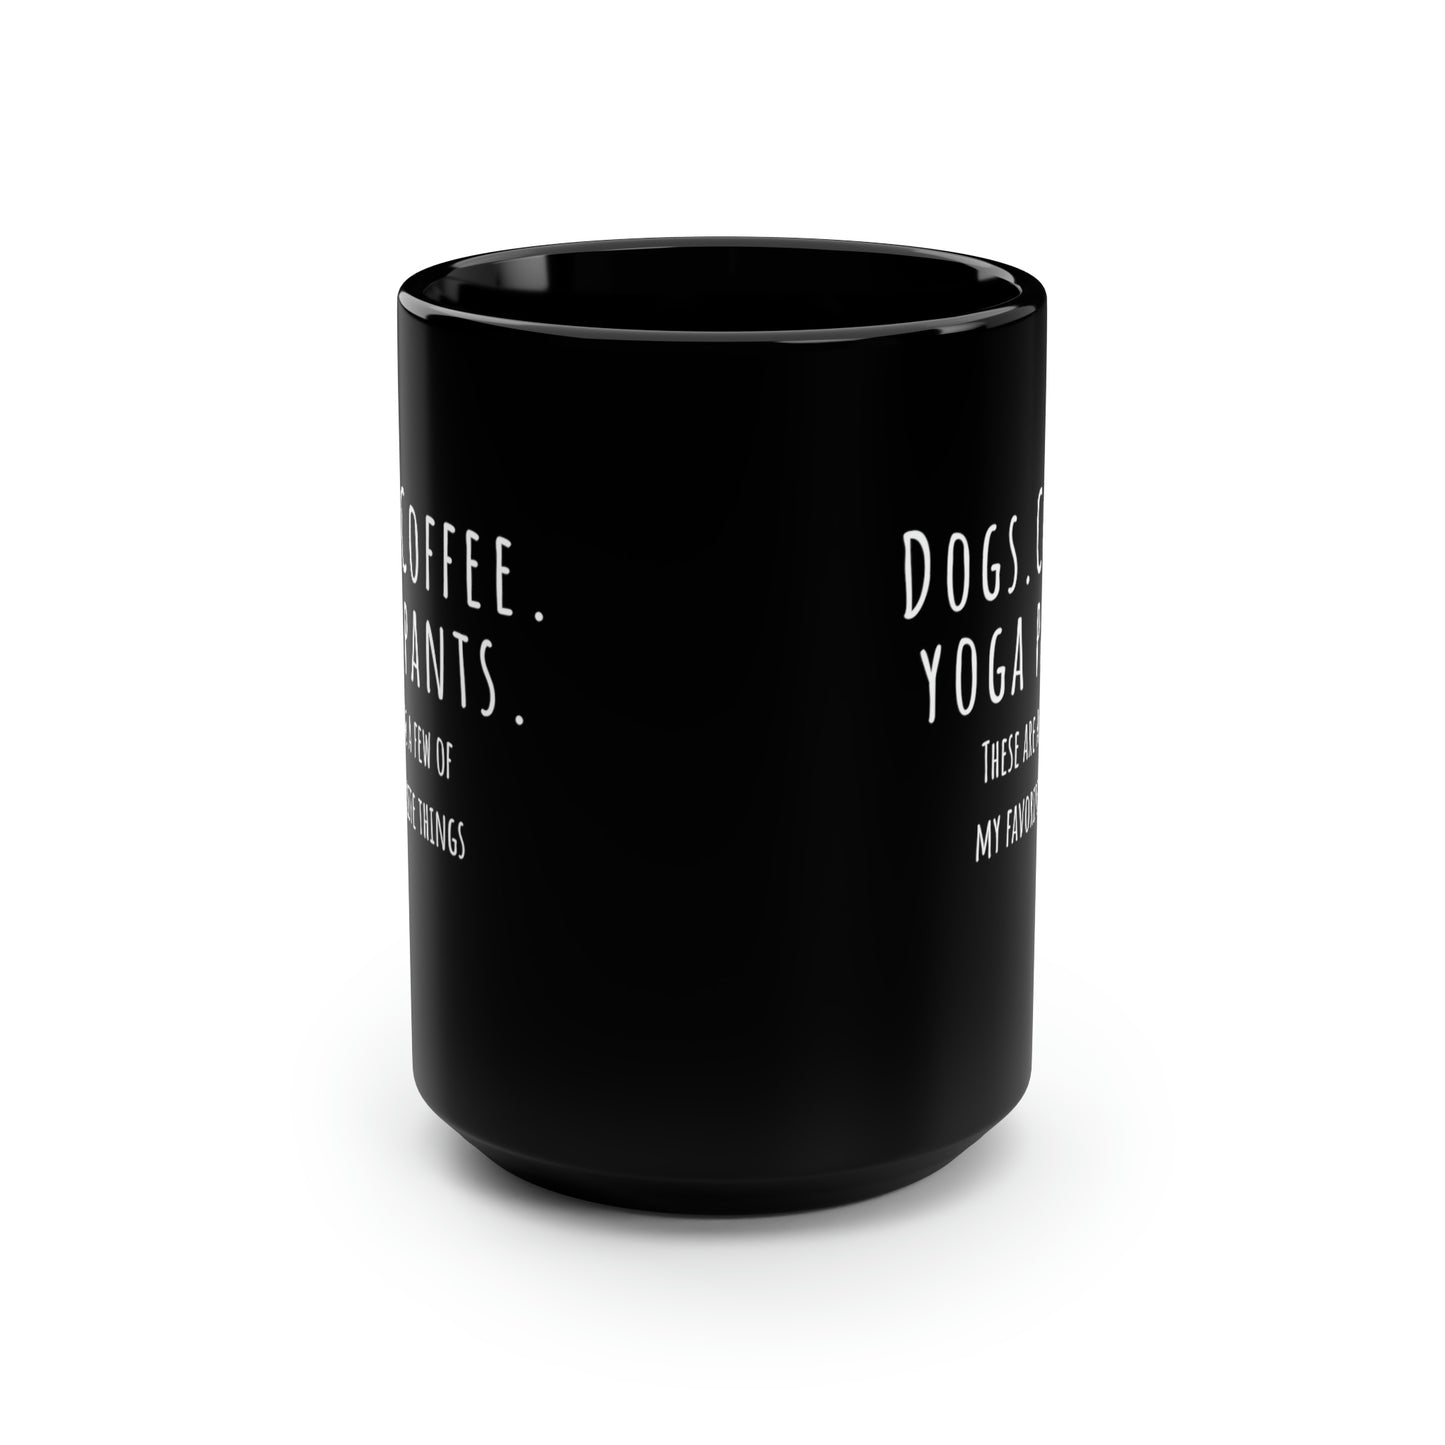 Dogs. Coffee. Yoga Pants. Black Mug, 15oz | Happy Dog Coffee Mugs